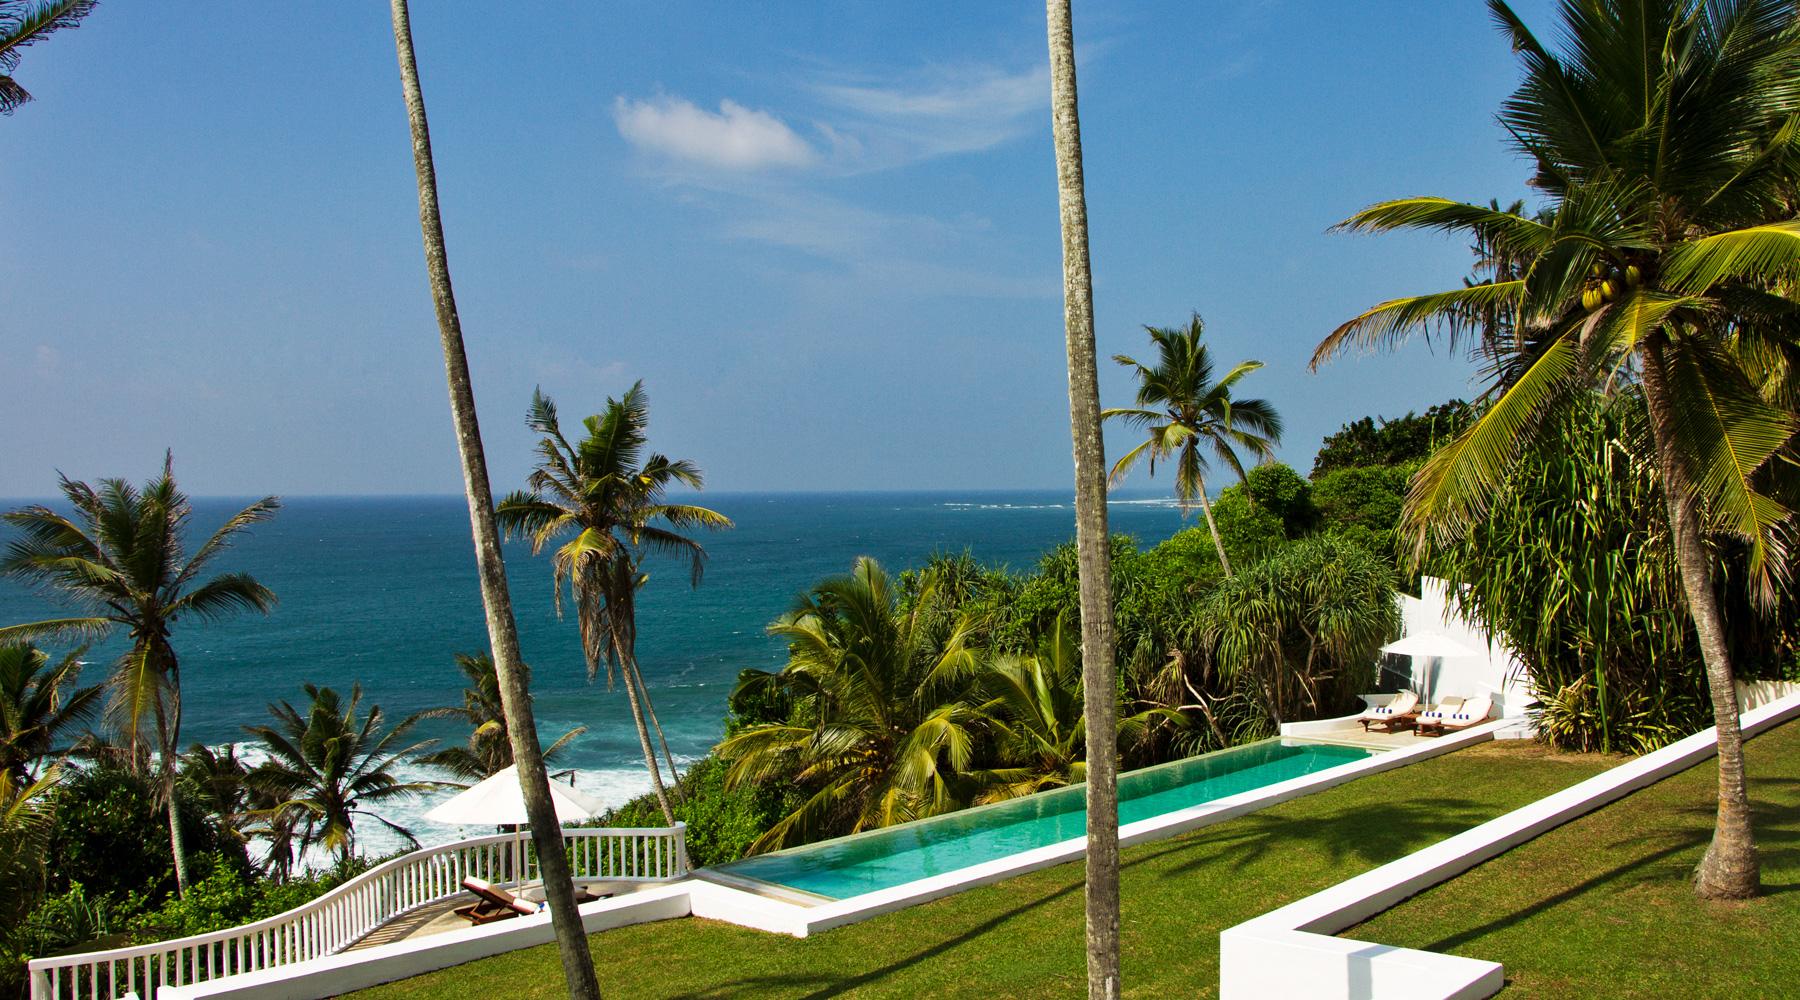 Sri Lanka Villa Holidays to Share